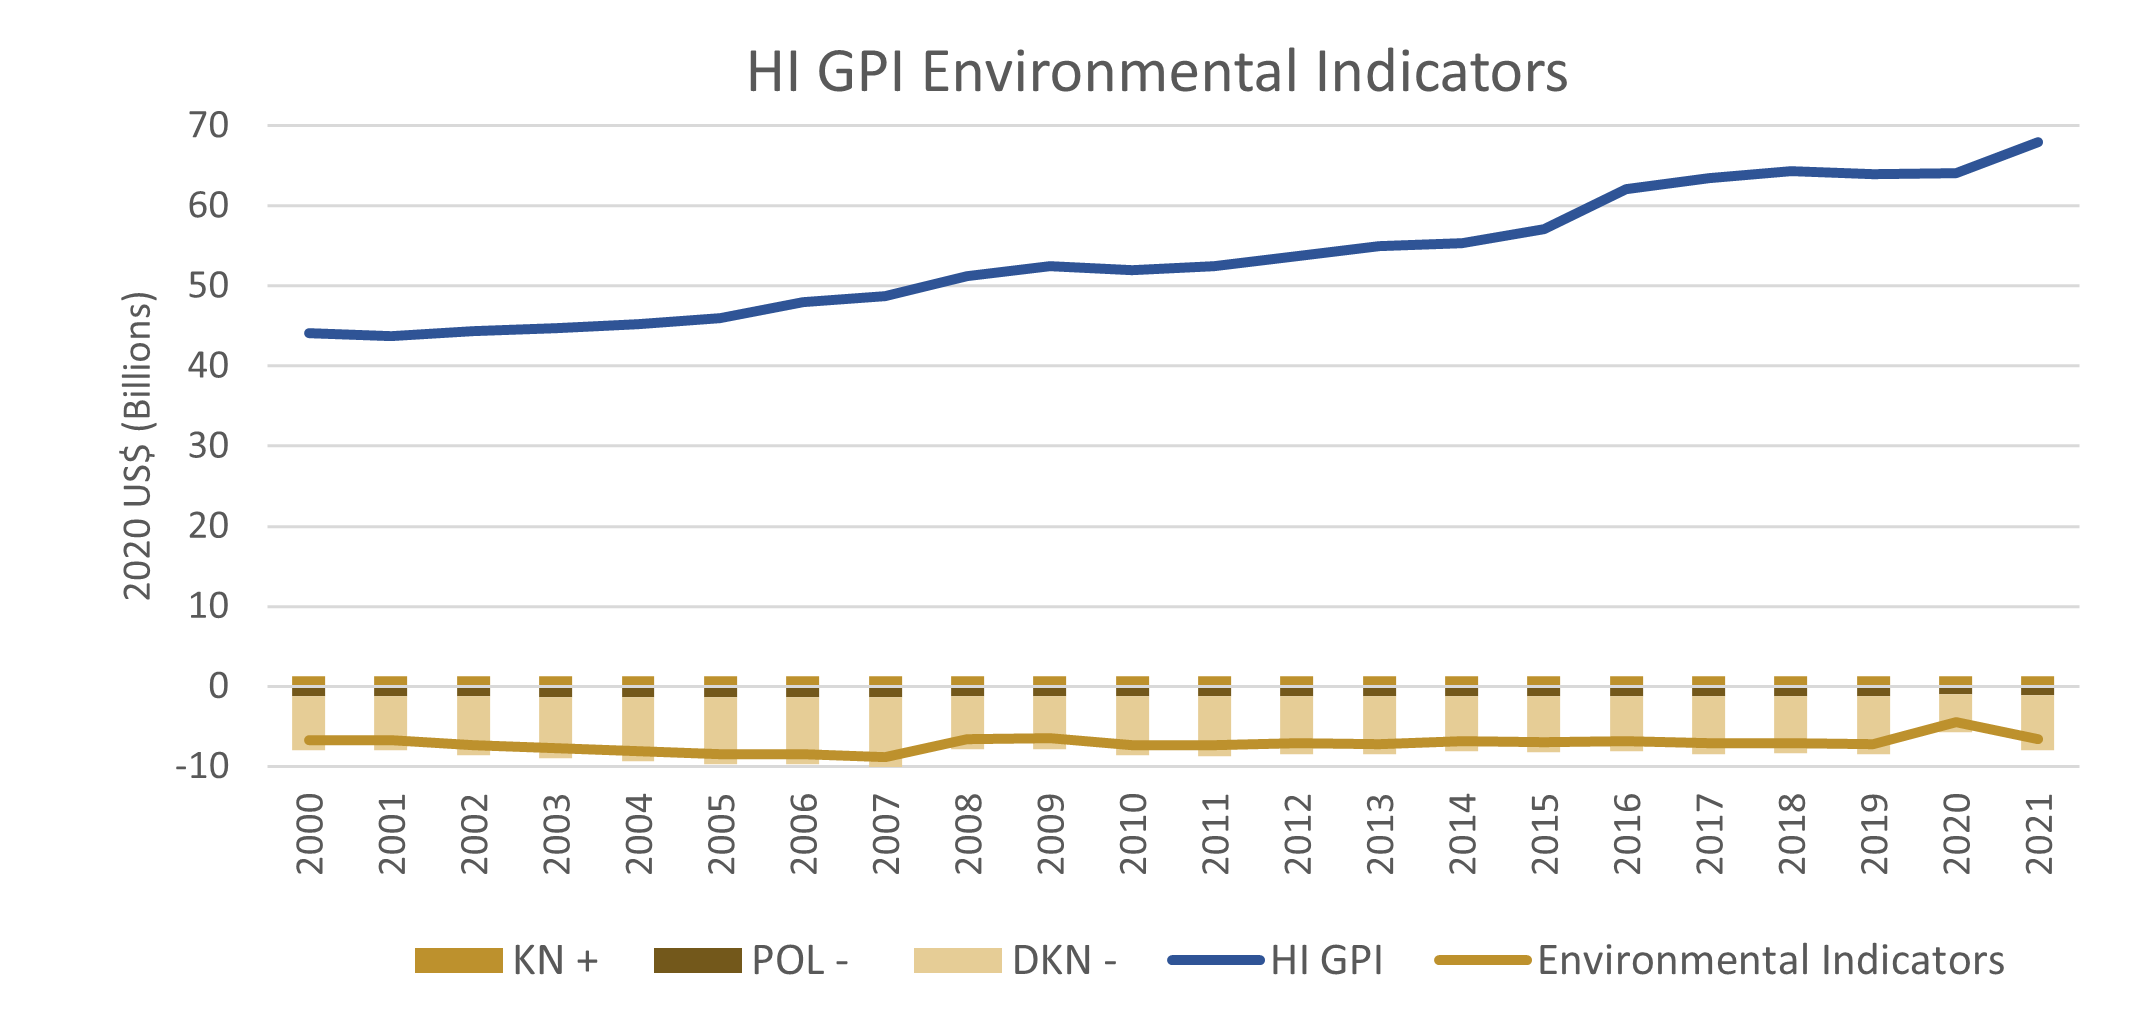 HI GPI Environmental Indicators GRAPH 